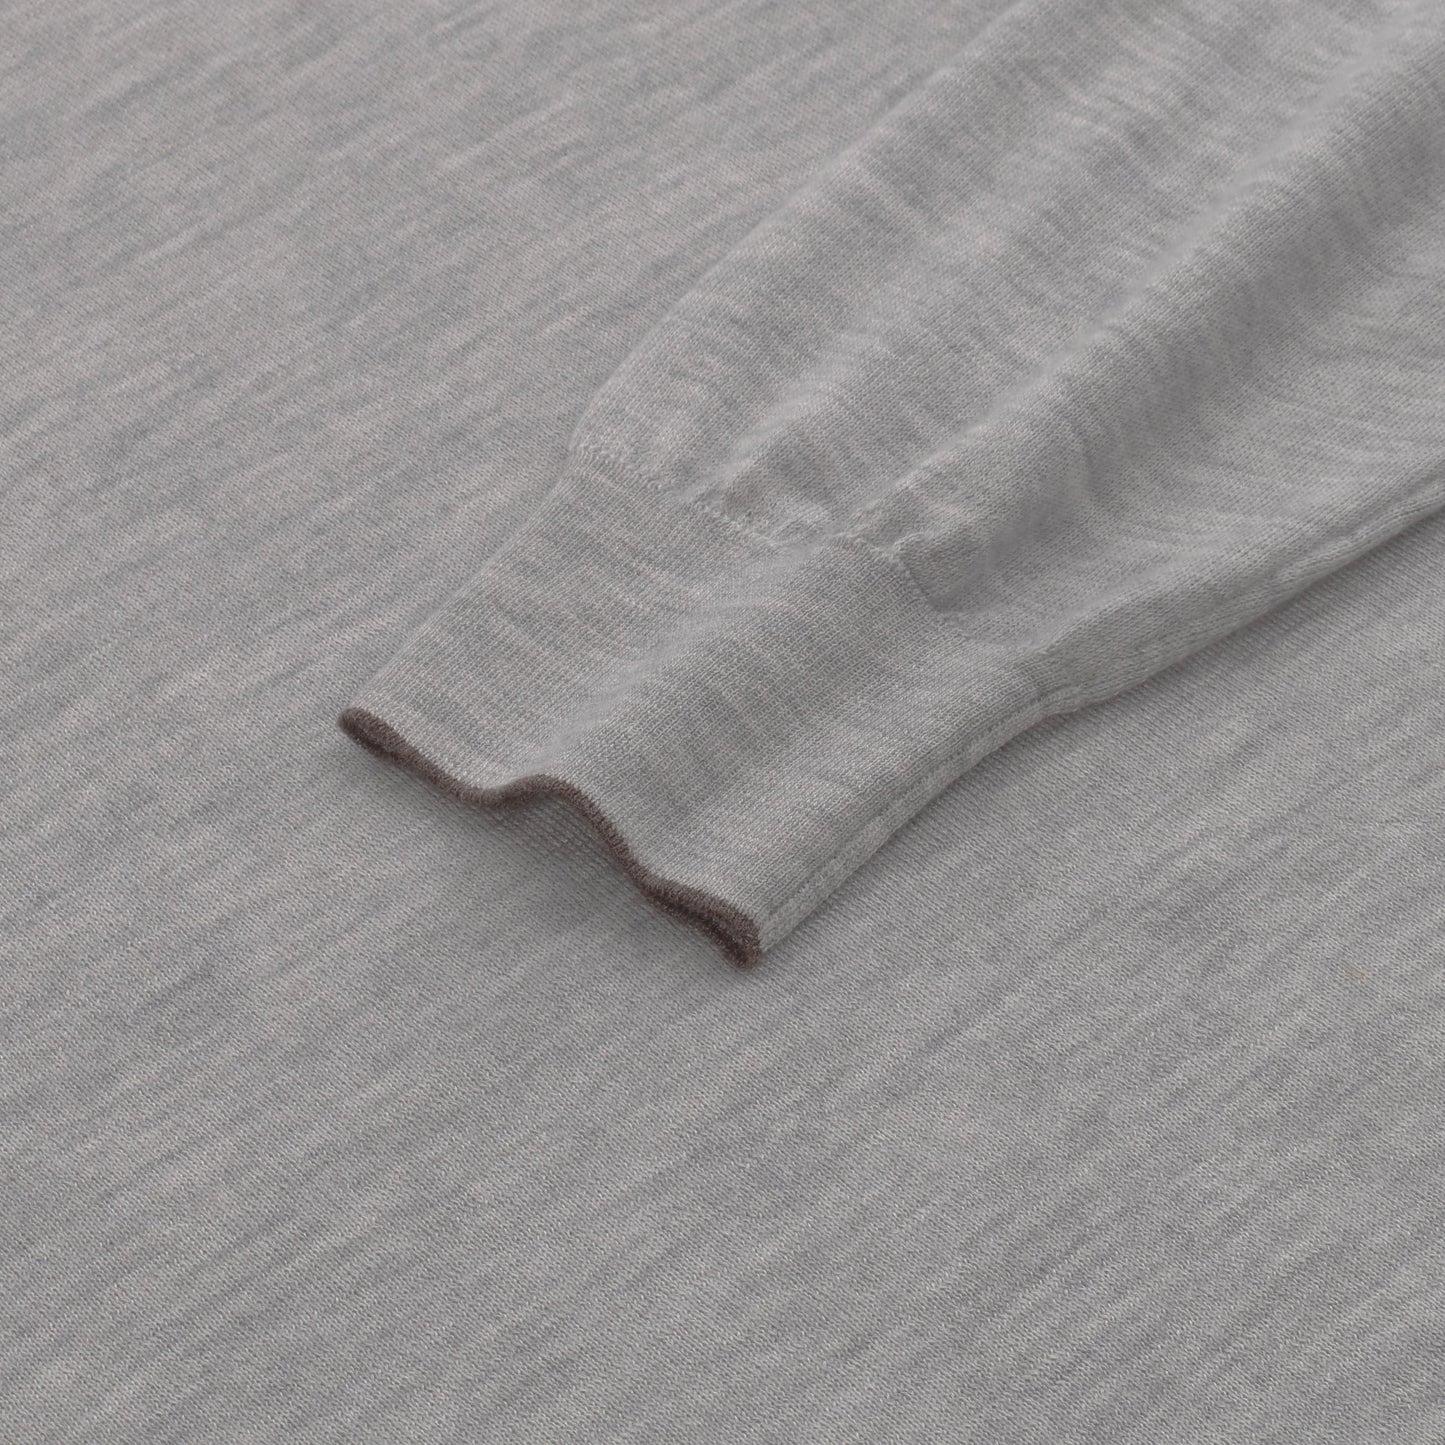 Cruciani Cashmere and Silk Crew - Neck Sweater in Light Grey Melange - SARTALE